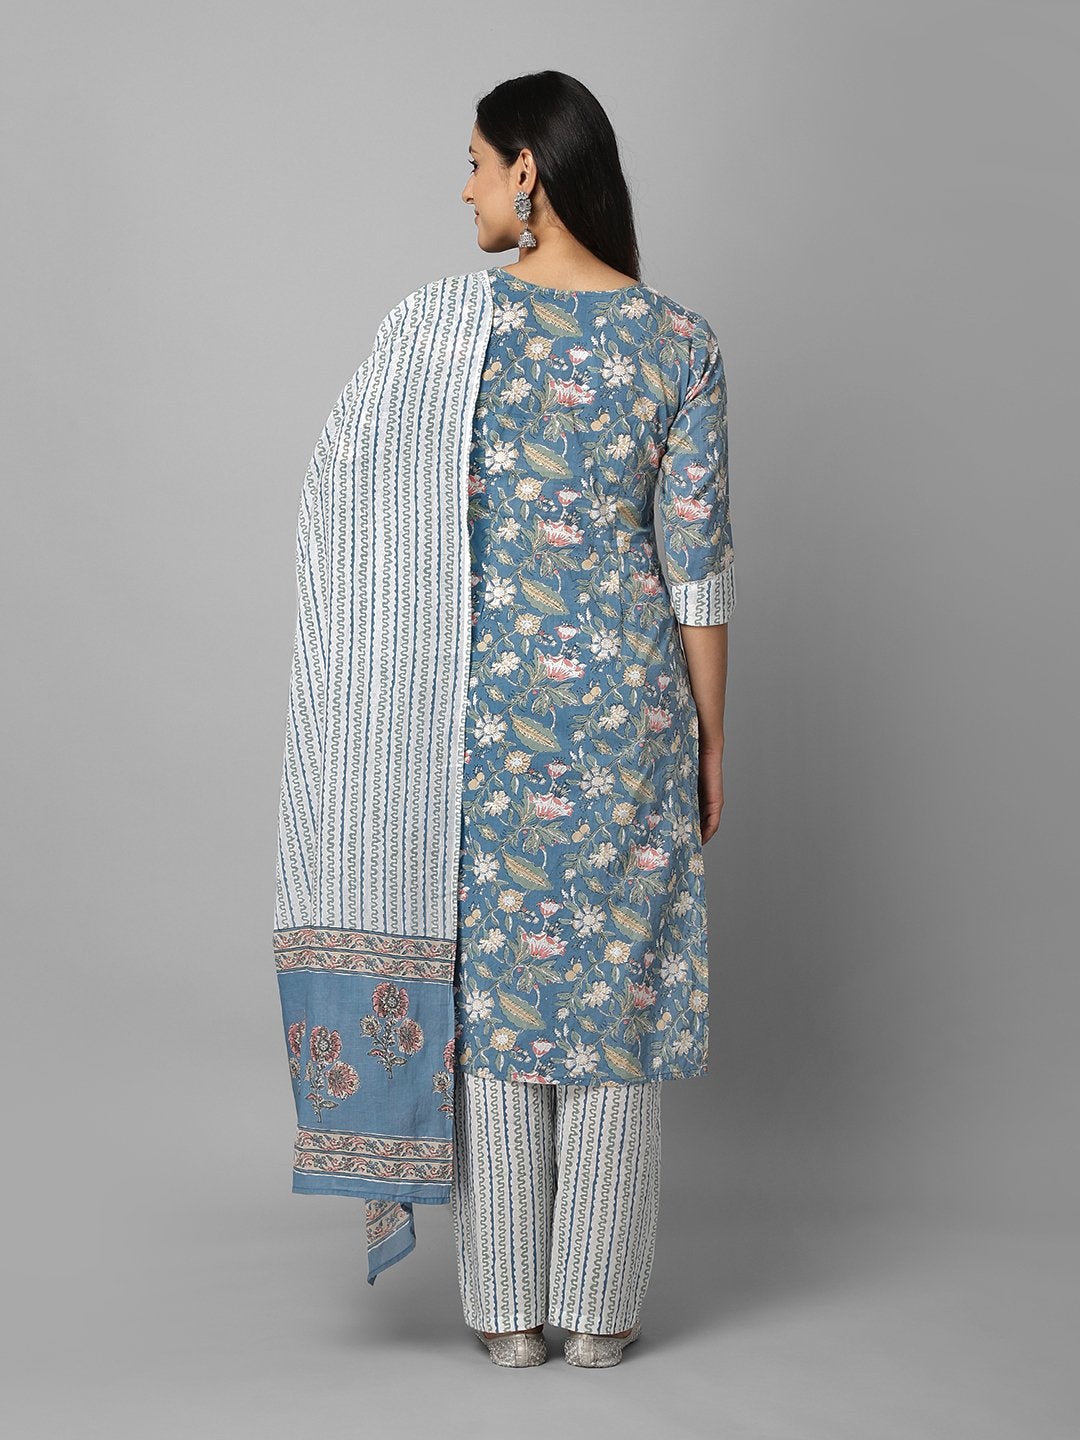 Women's Blue And White Floral Printed Side Slit Straight Kurta Palazzo And Dupatta Set - Azira